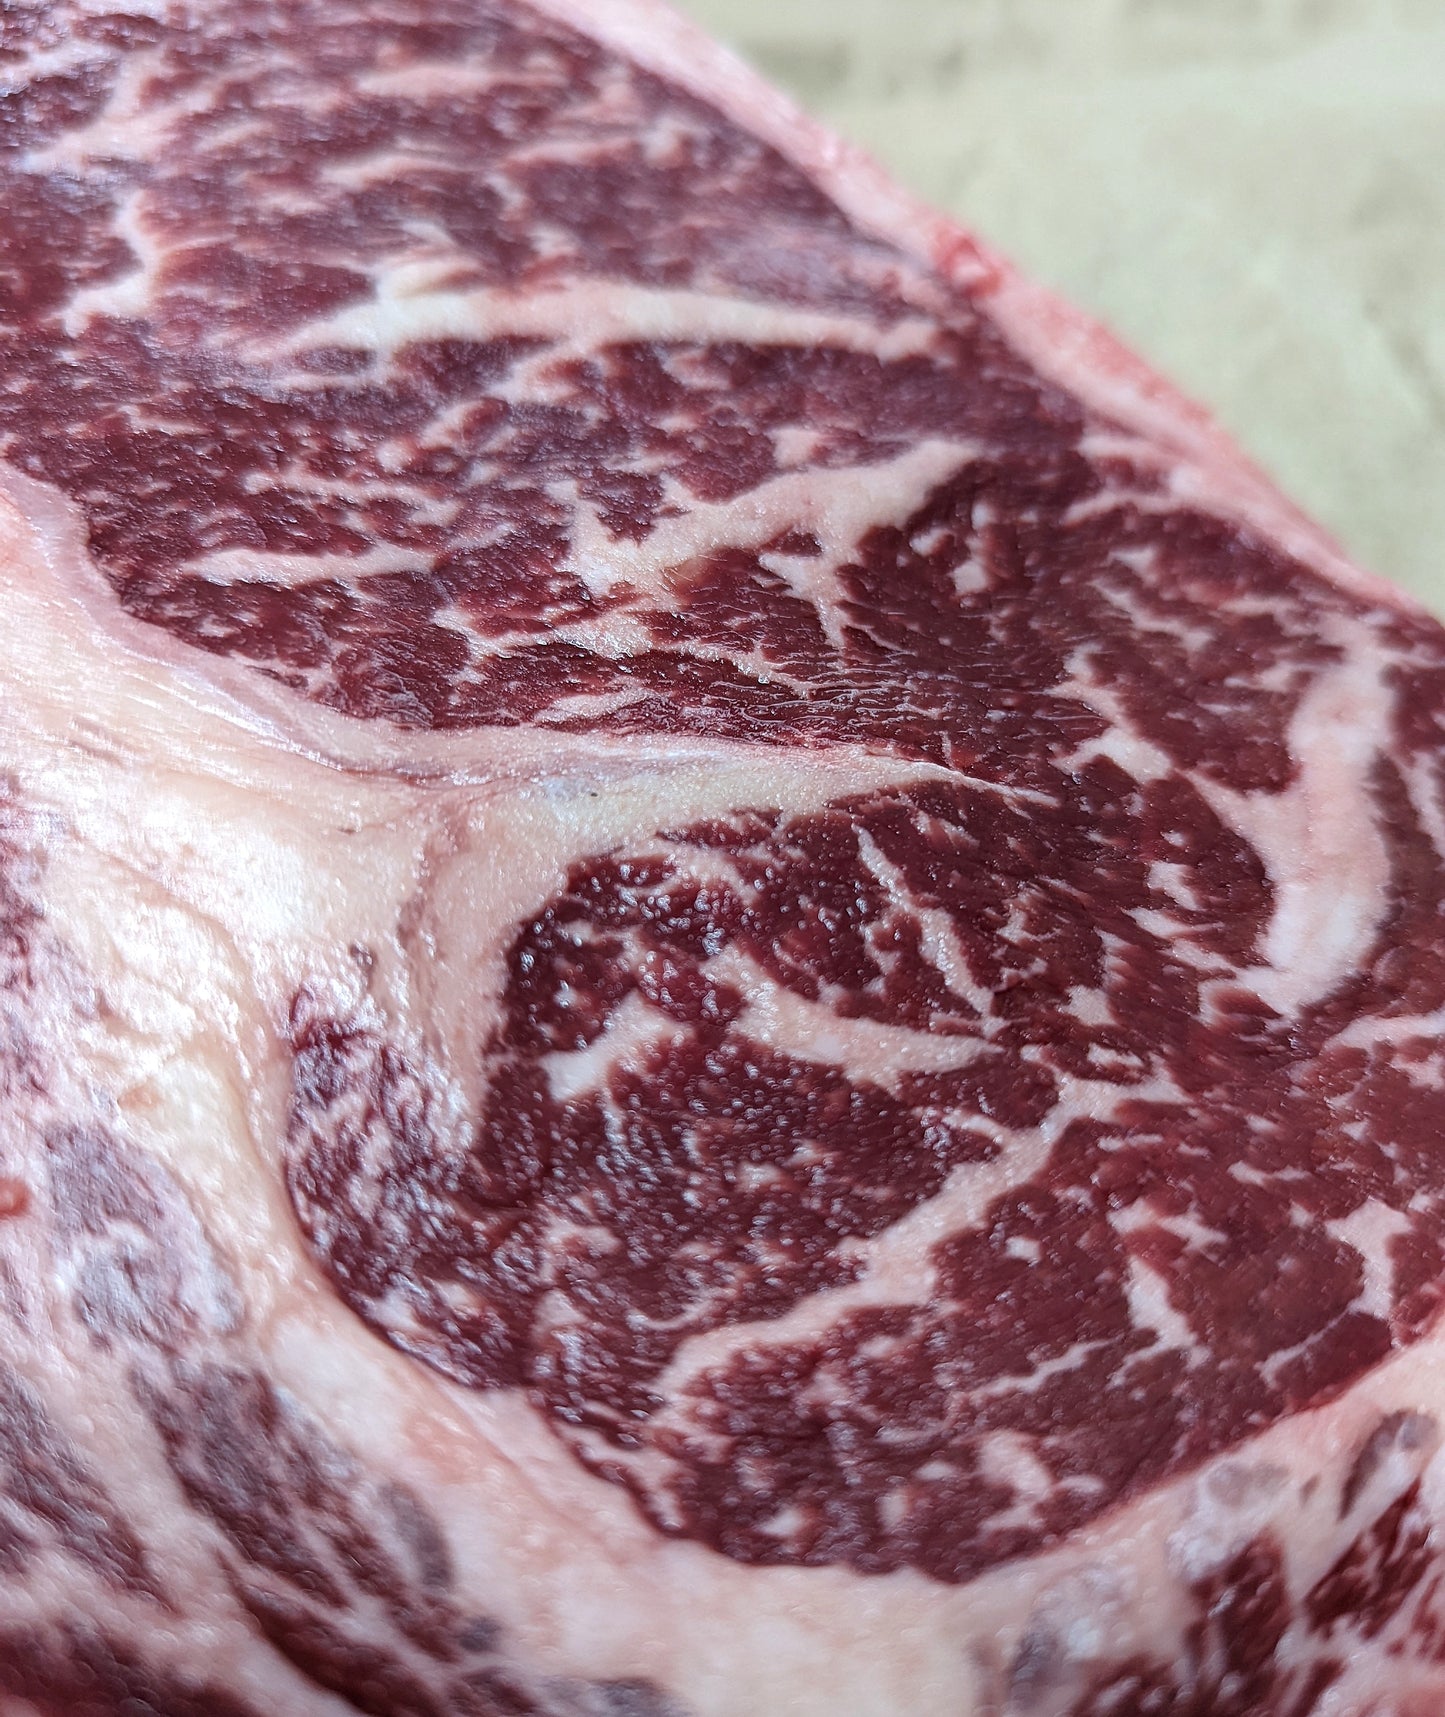 Ribeye Steak | Fullblood Wagyu